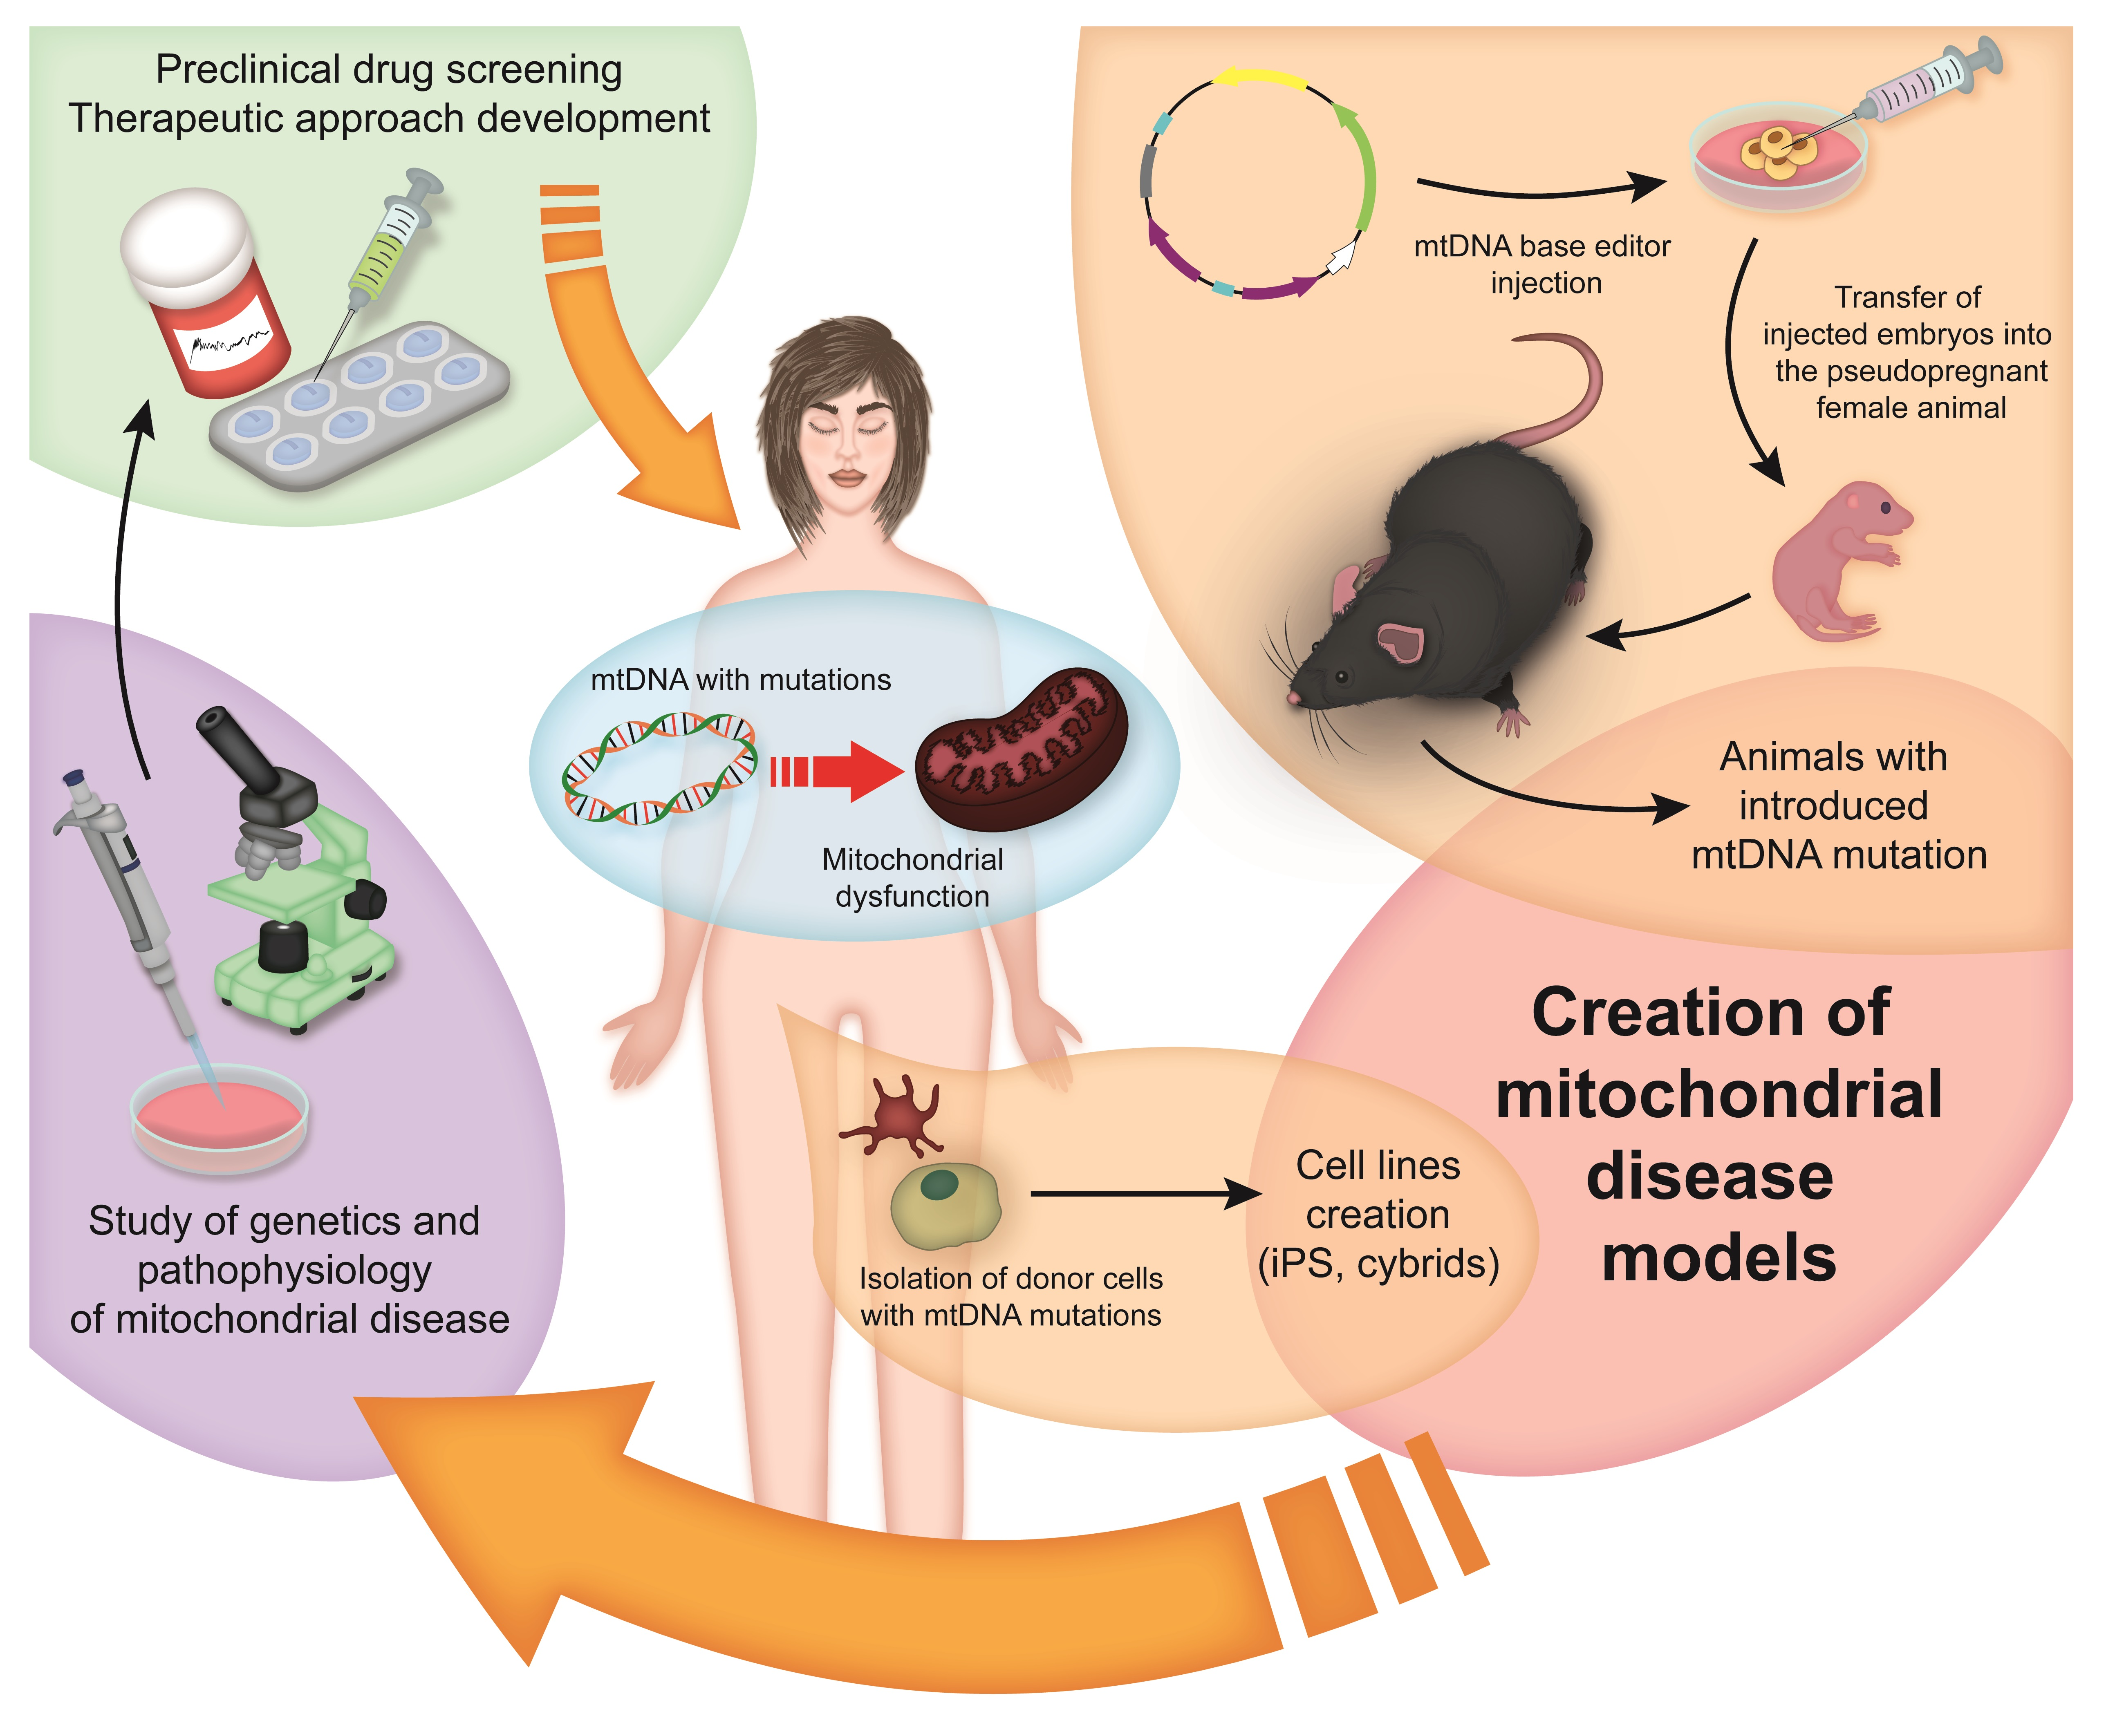 Mitochondrial Disease